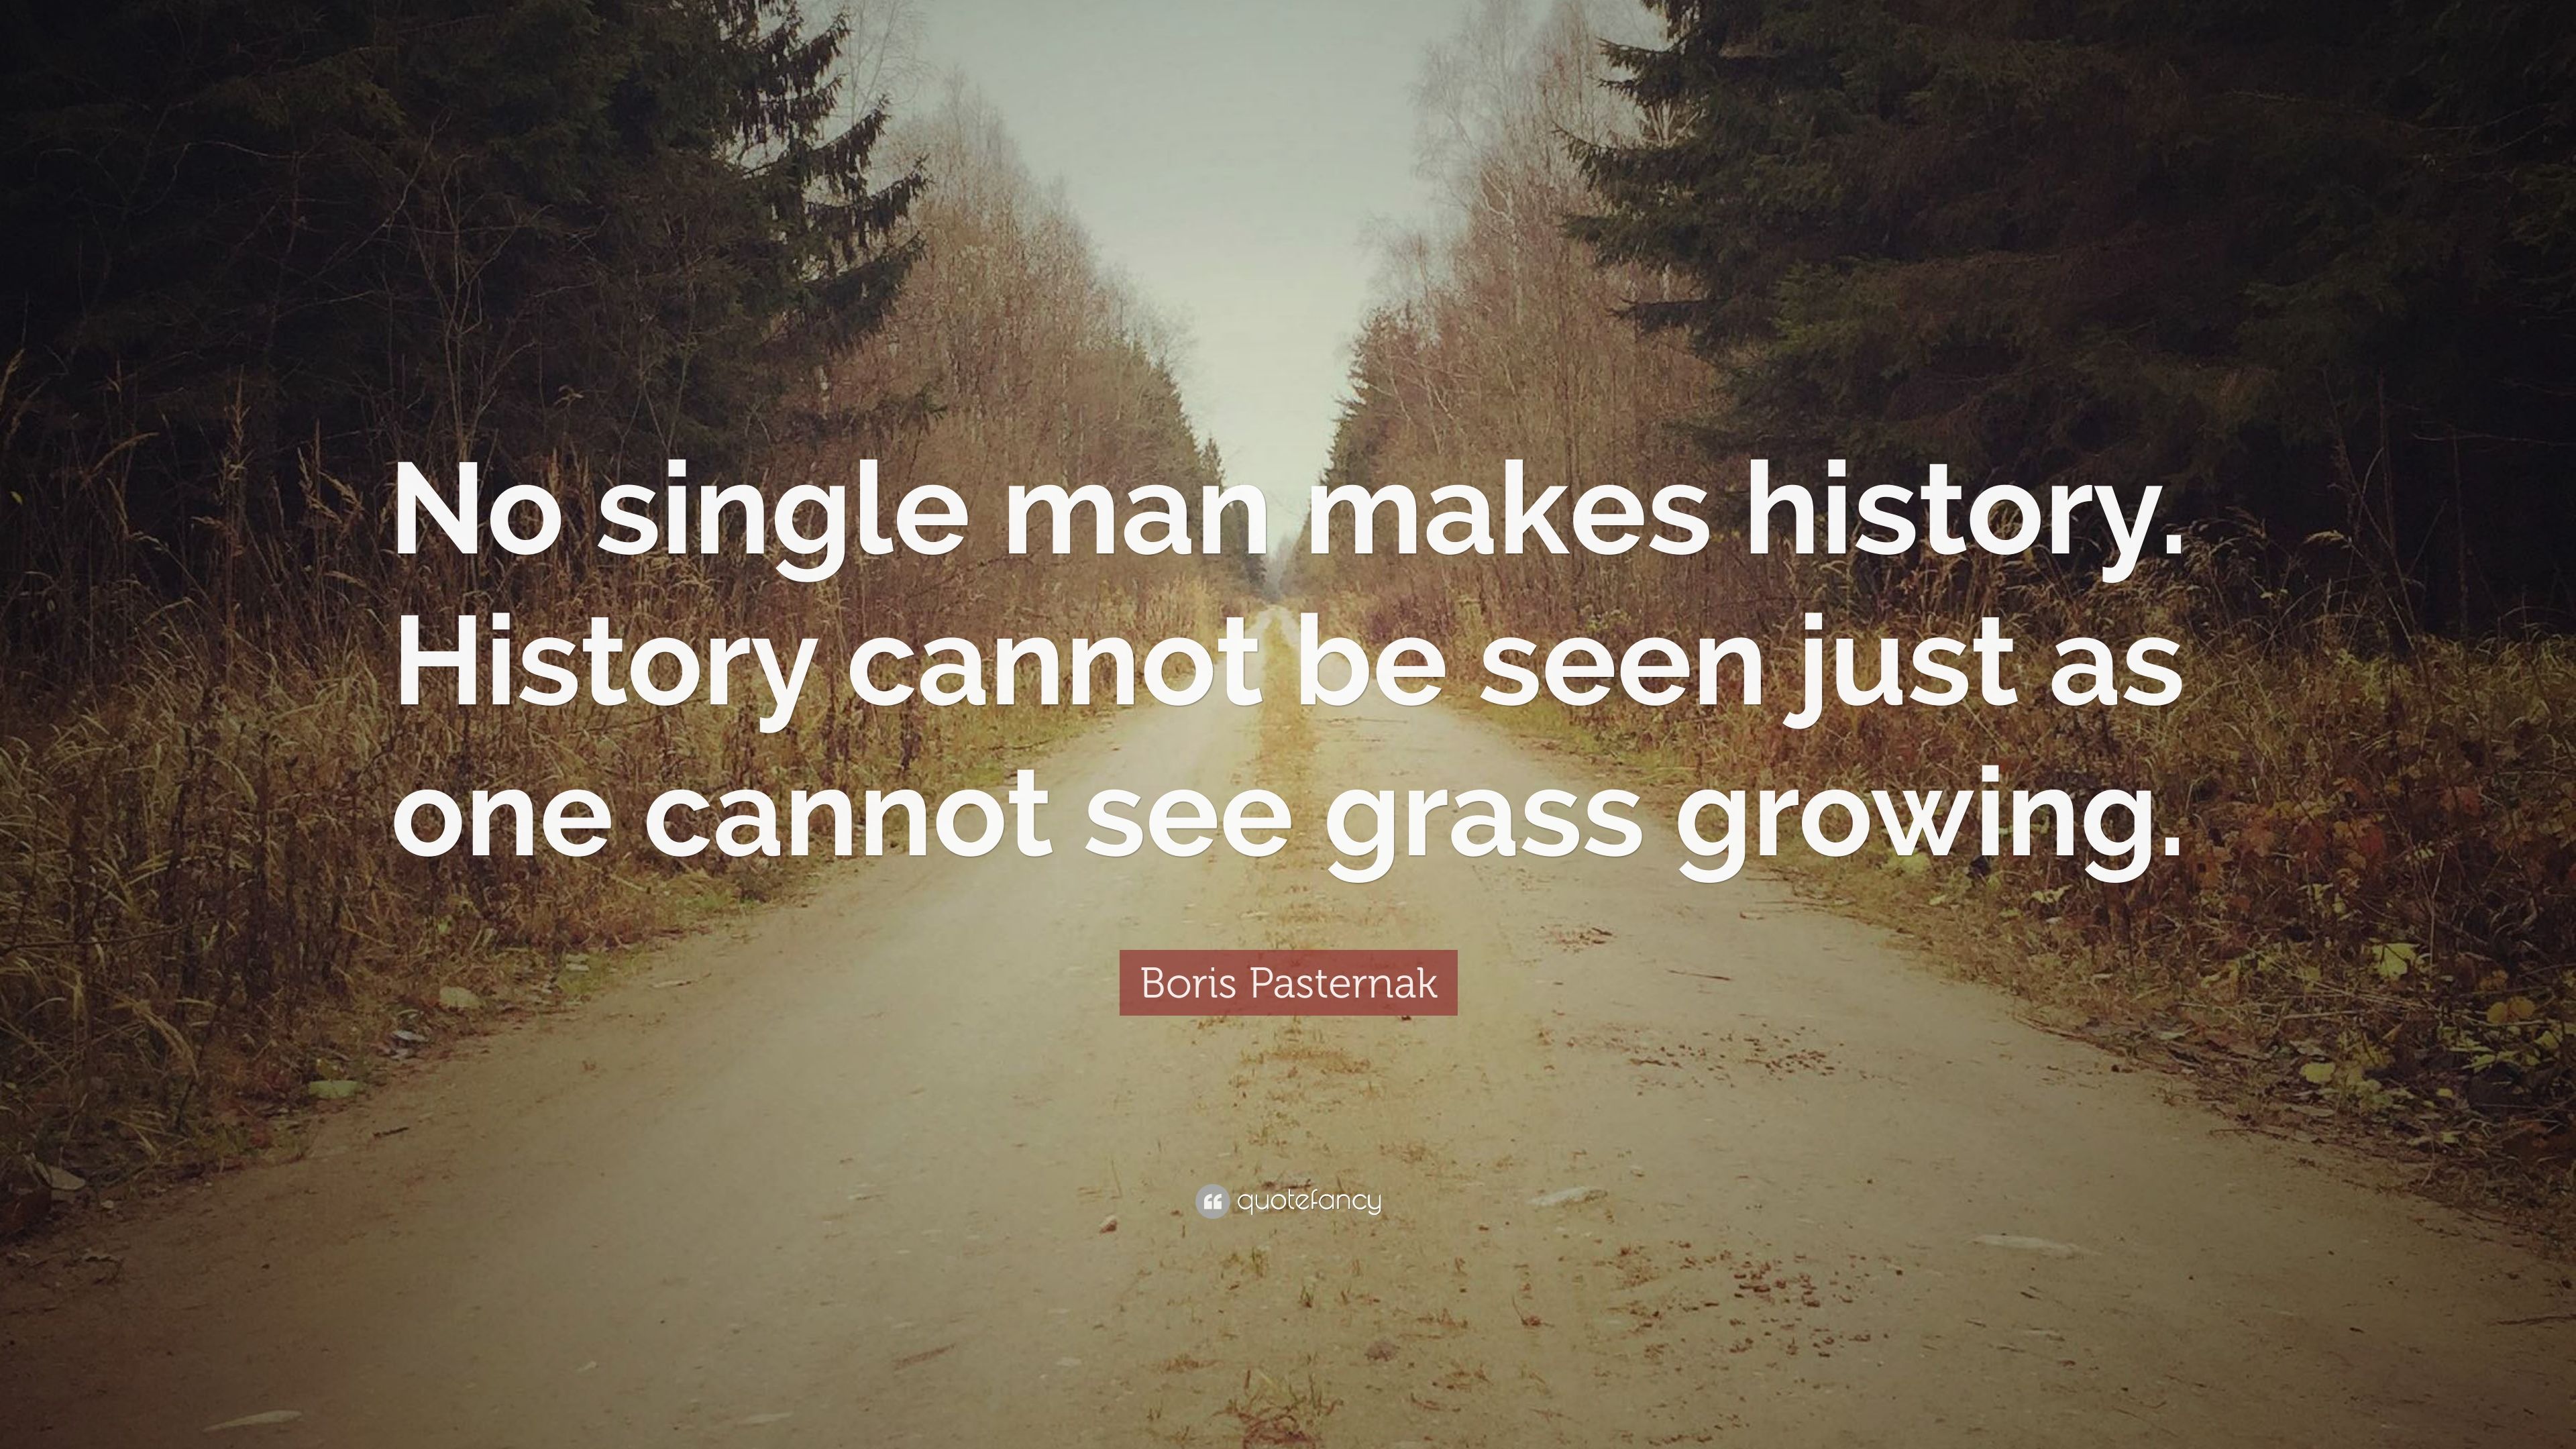 Boris Pasternak Quote: “No single man makes history. History